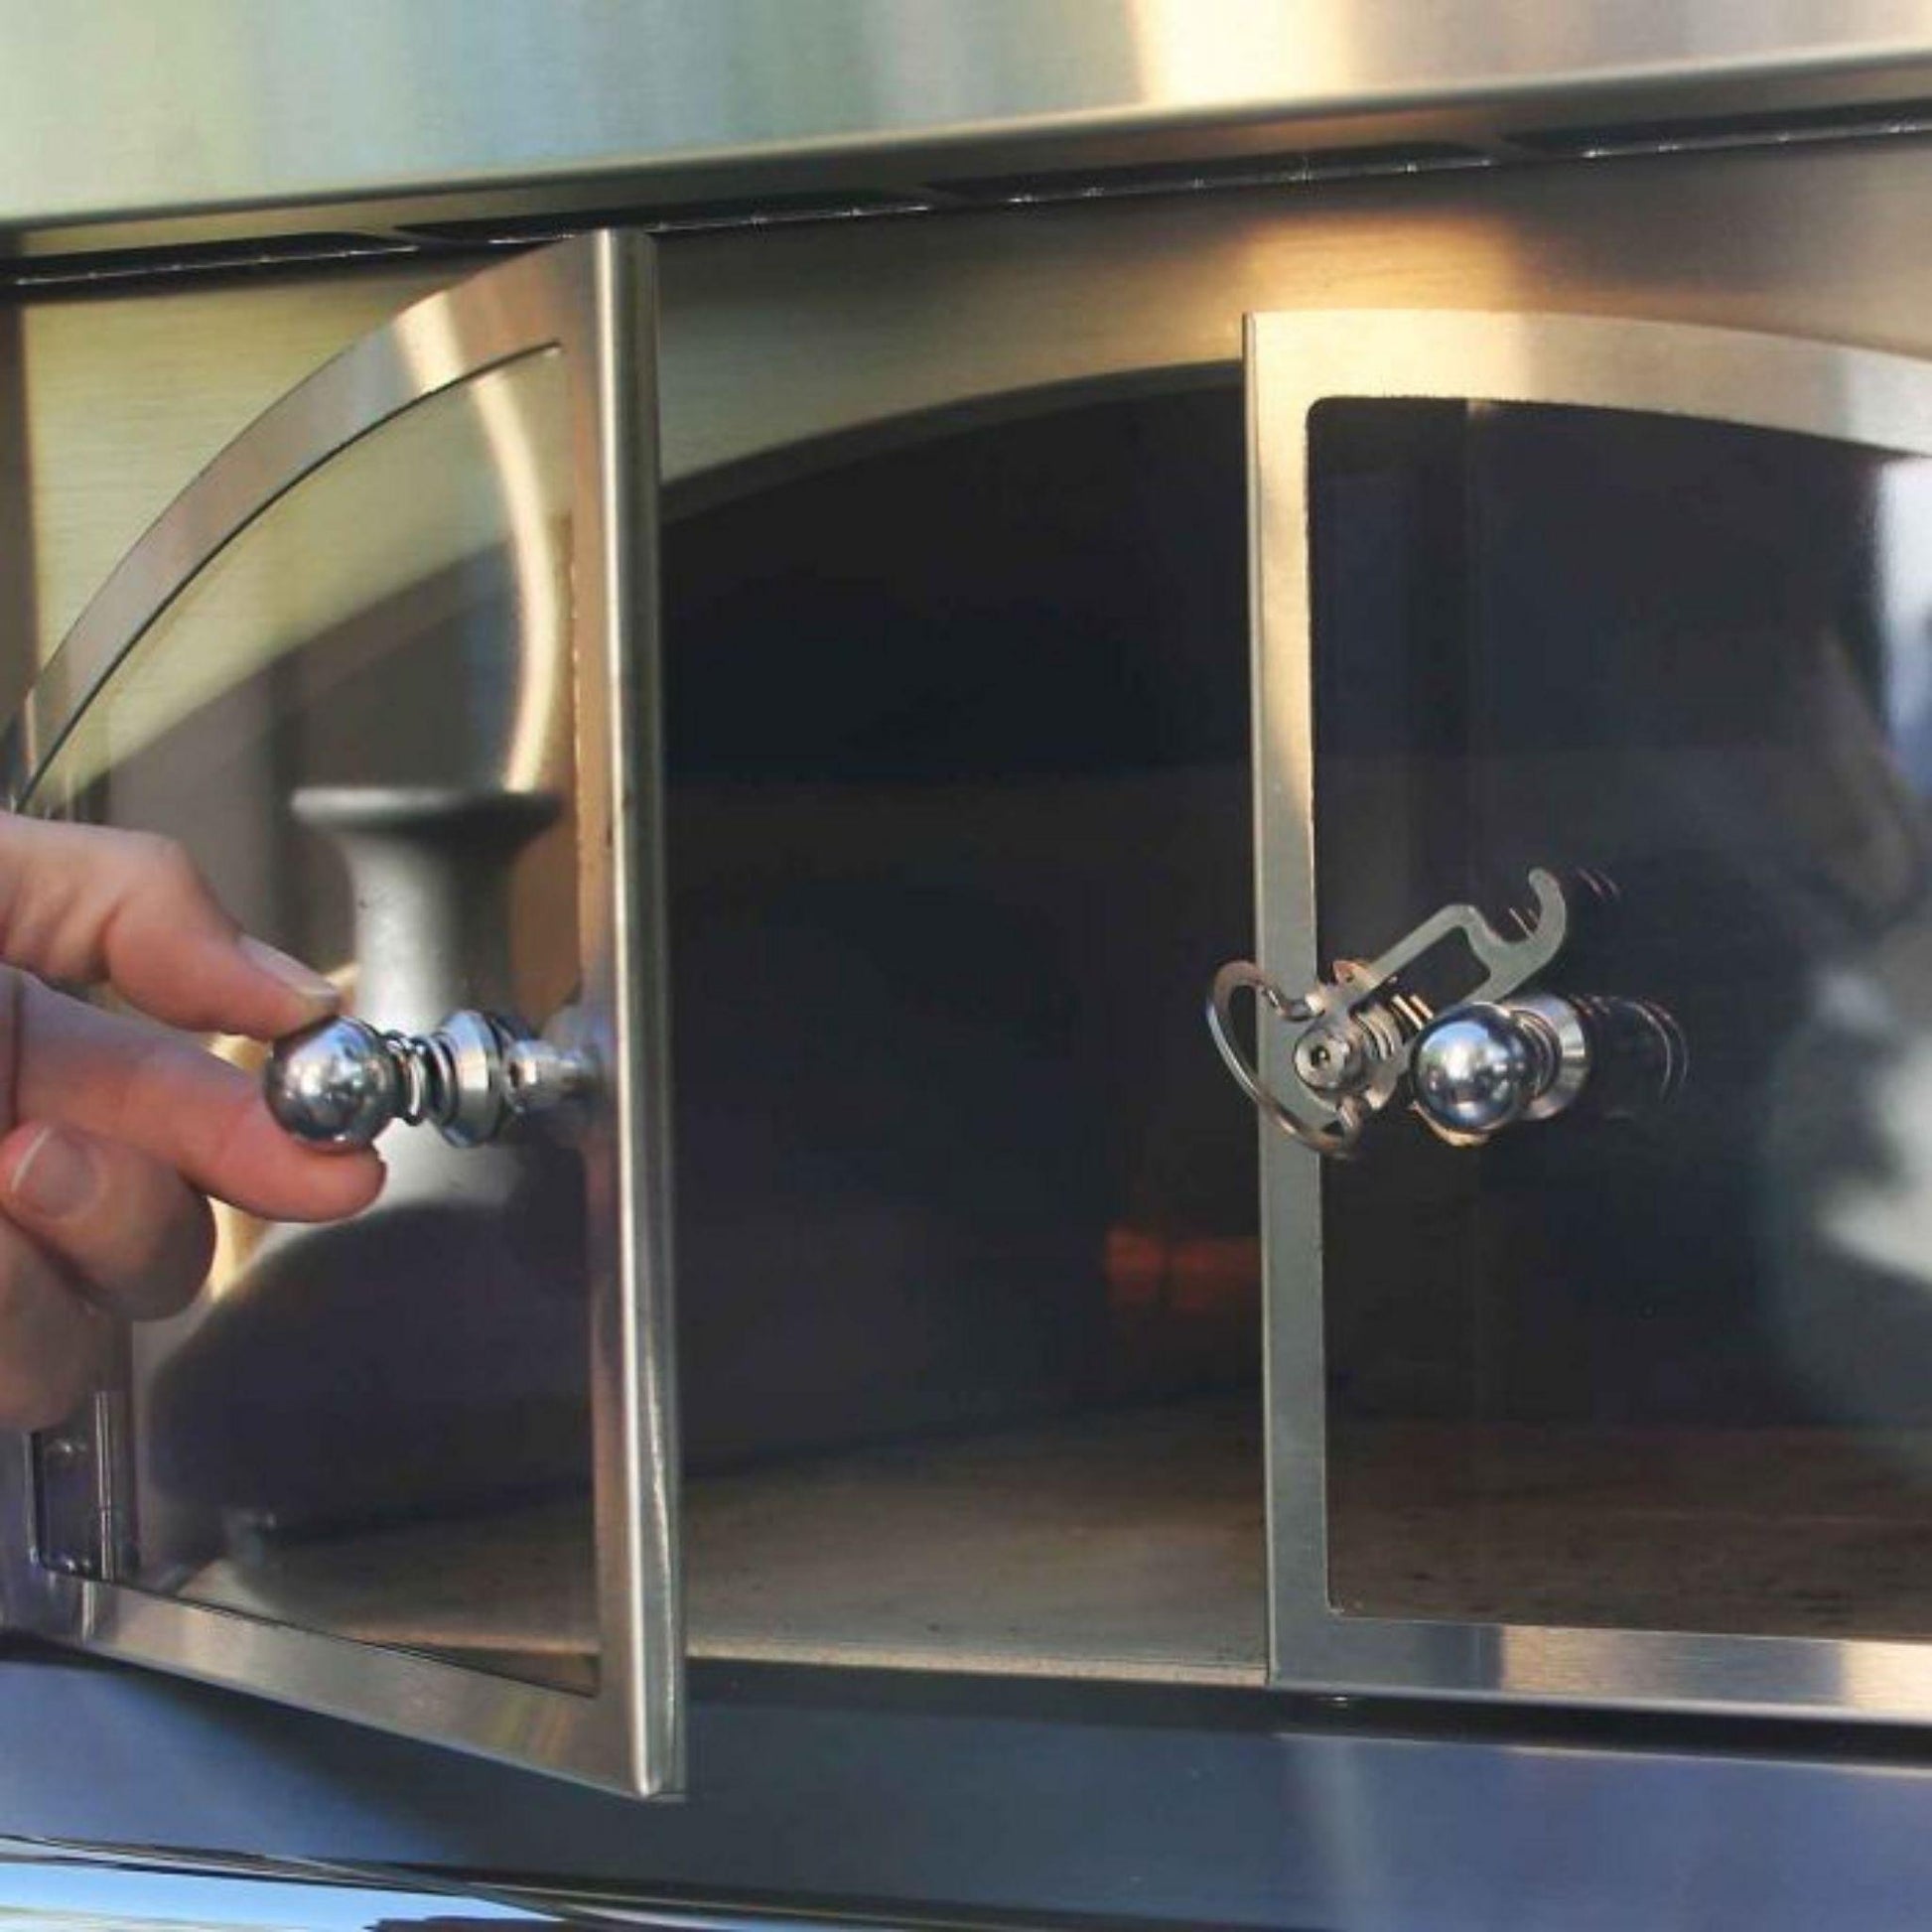 Alfresco 30" Carmine Red Gloss Liquid Propane Pizza Oven for Built-in Installations